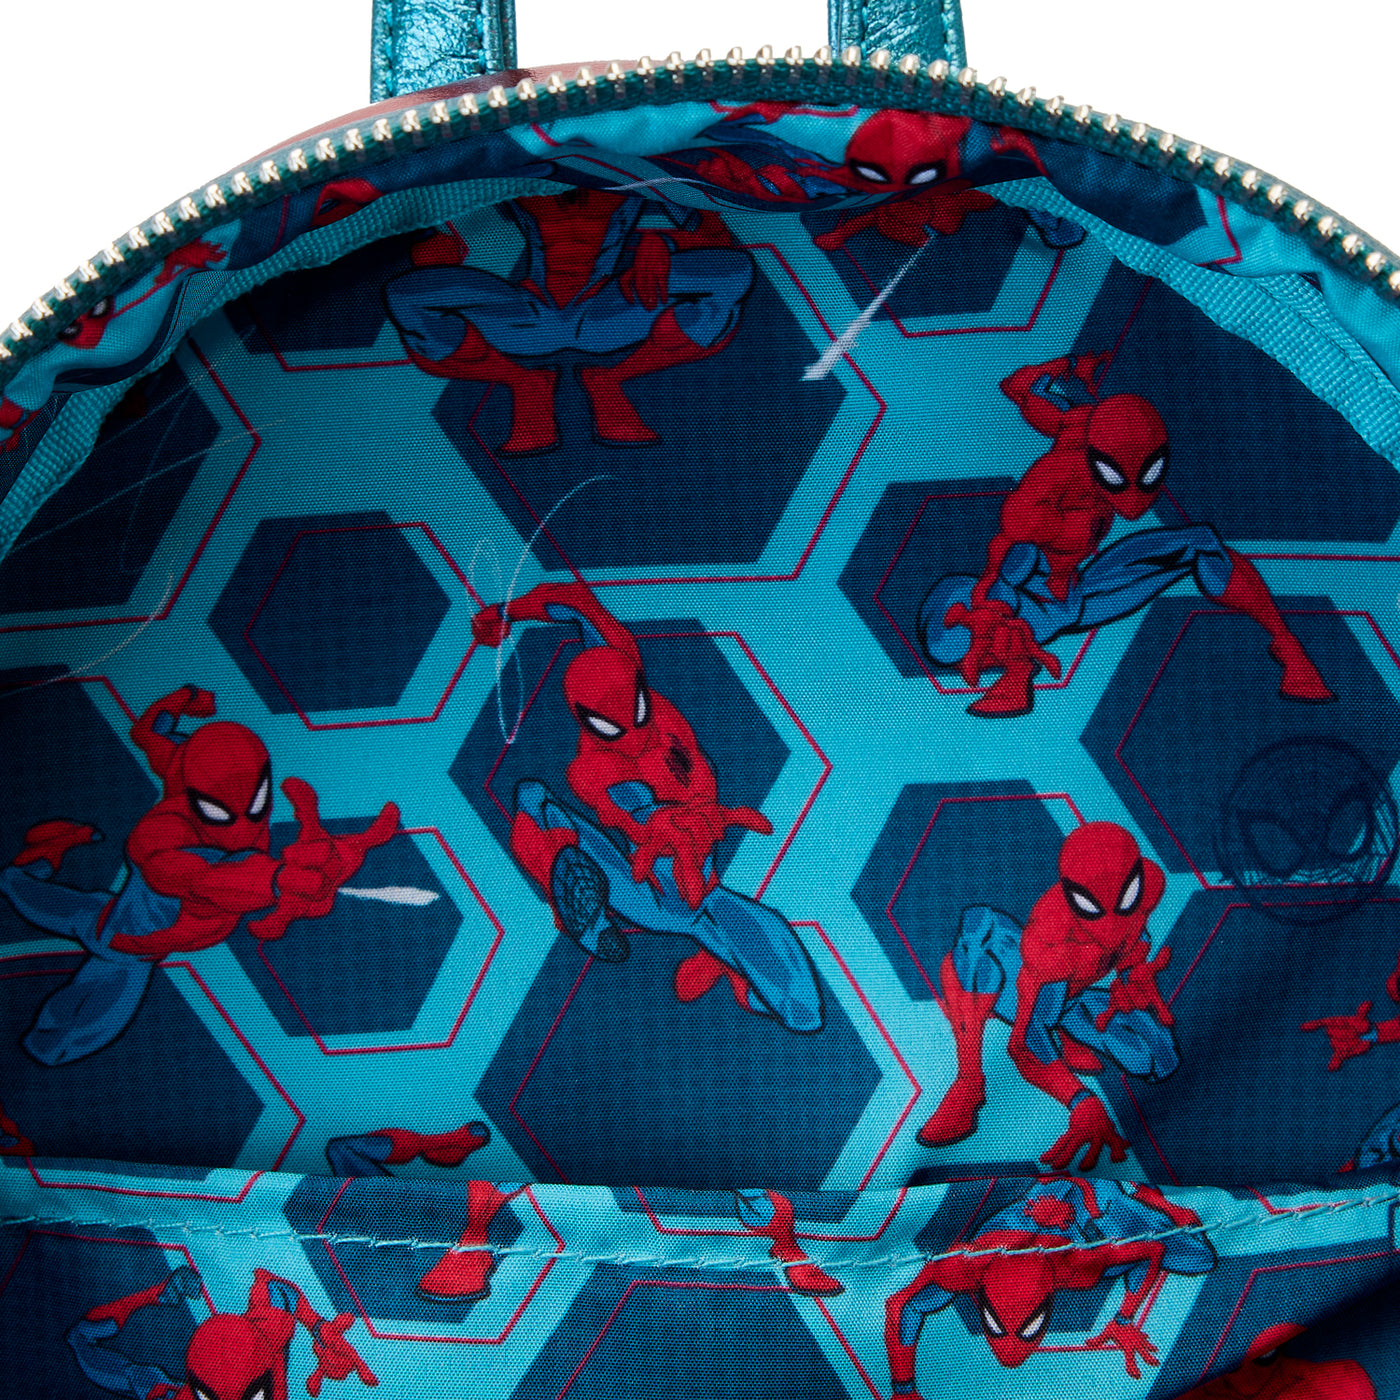 Marvel Spider-man Cosplay Metallic Mini Backpack